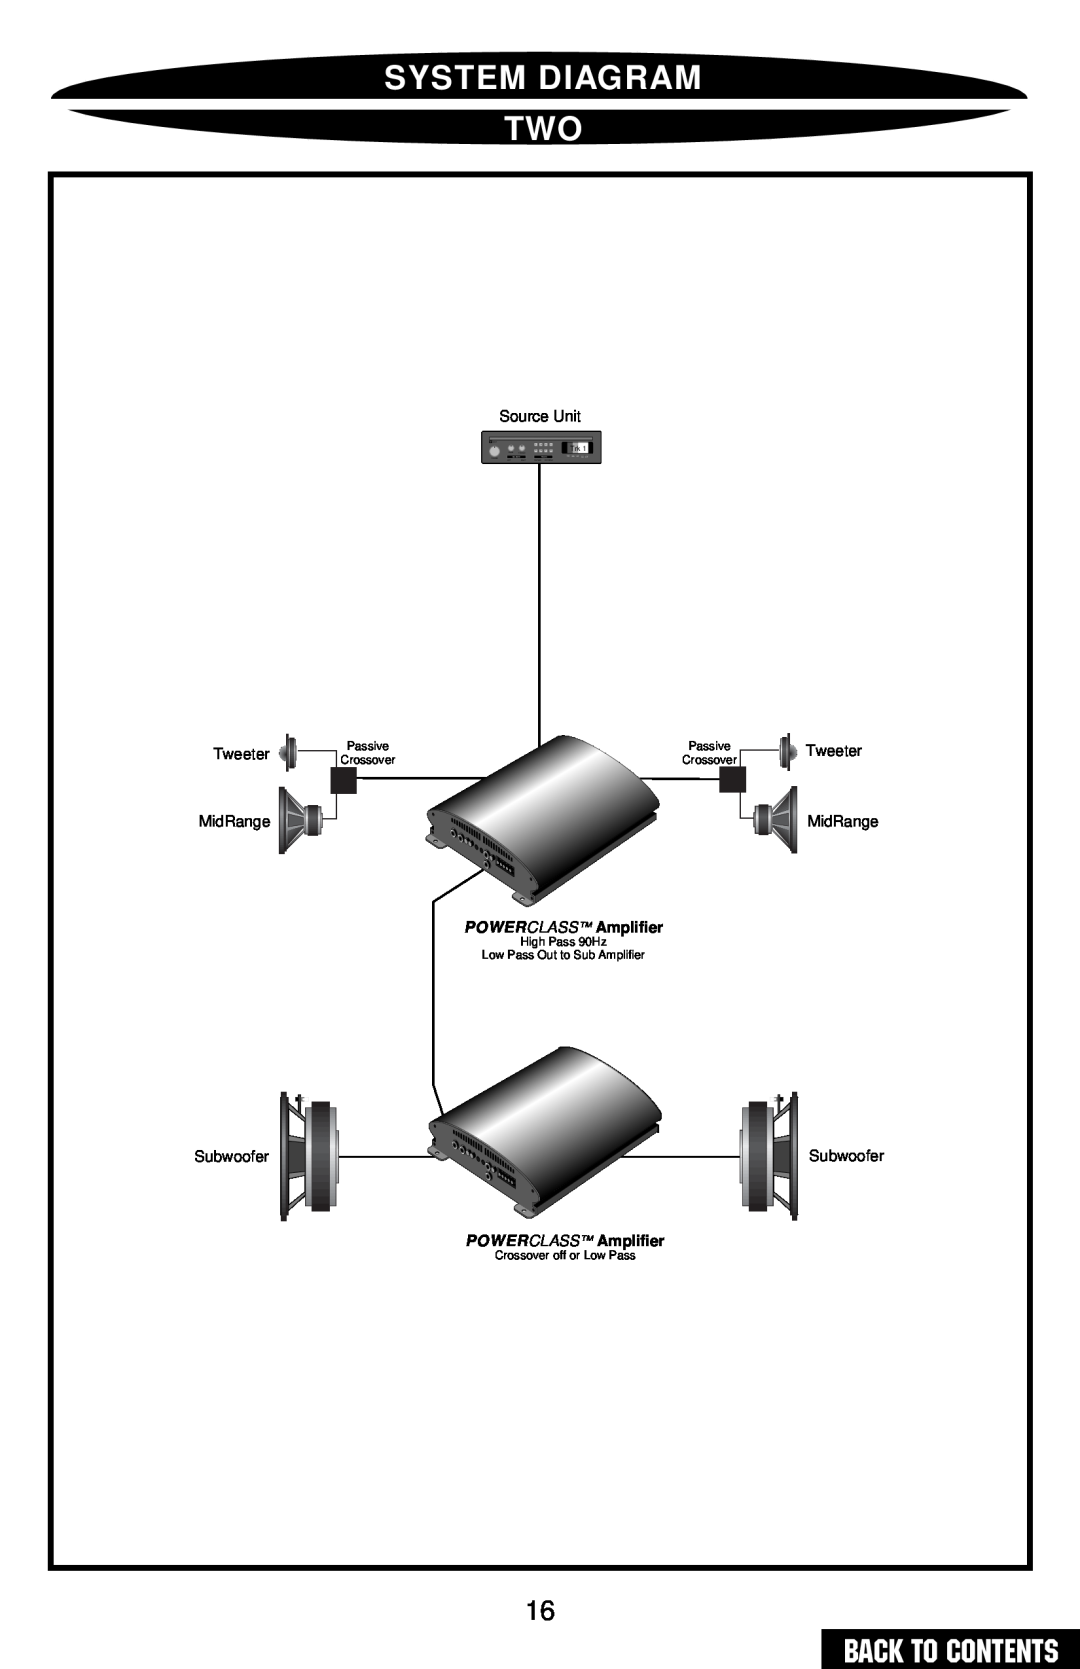 Precision Power PC2400 System Diagram Two, Back To Contents, Source Unit, Tweeter, MidRange, POWERCLASS Amplifier, Passive 